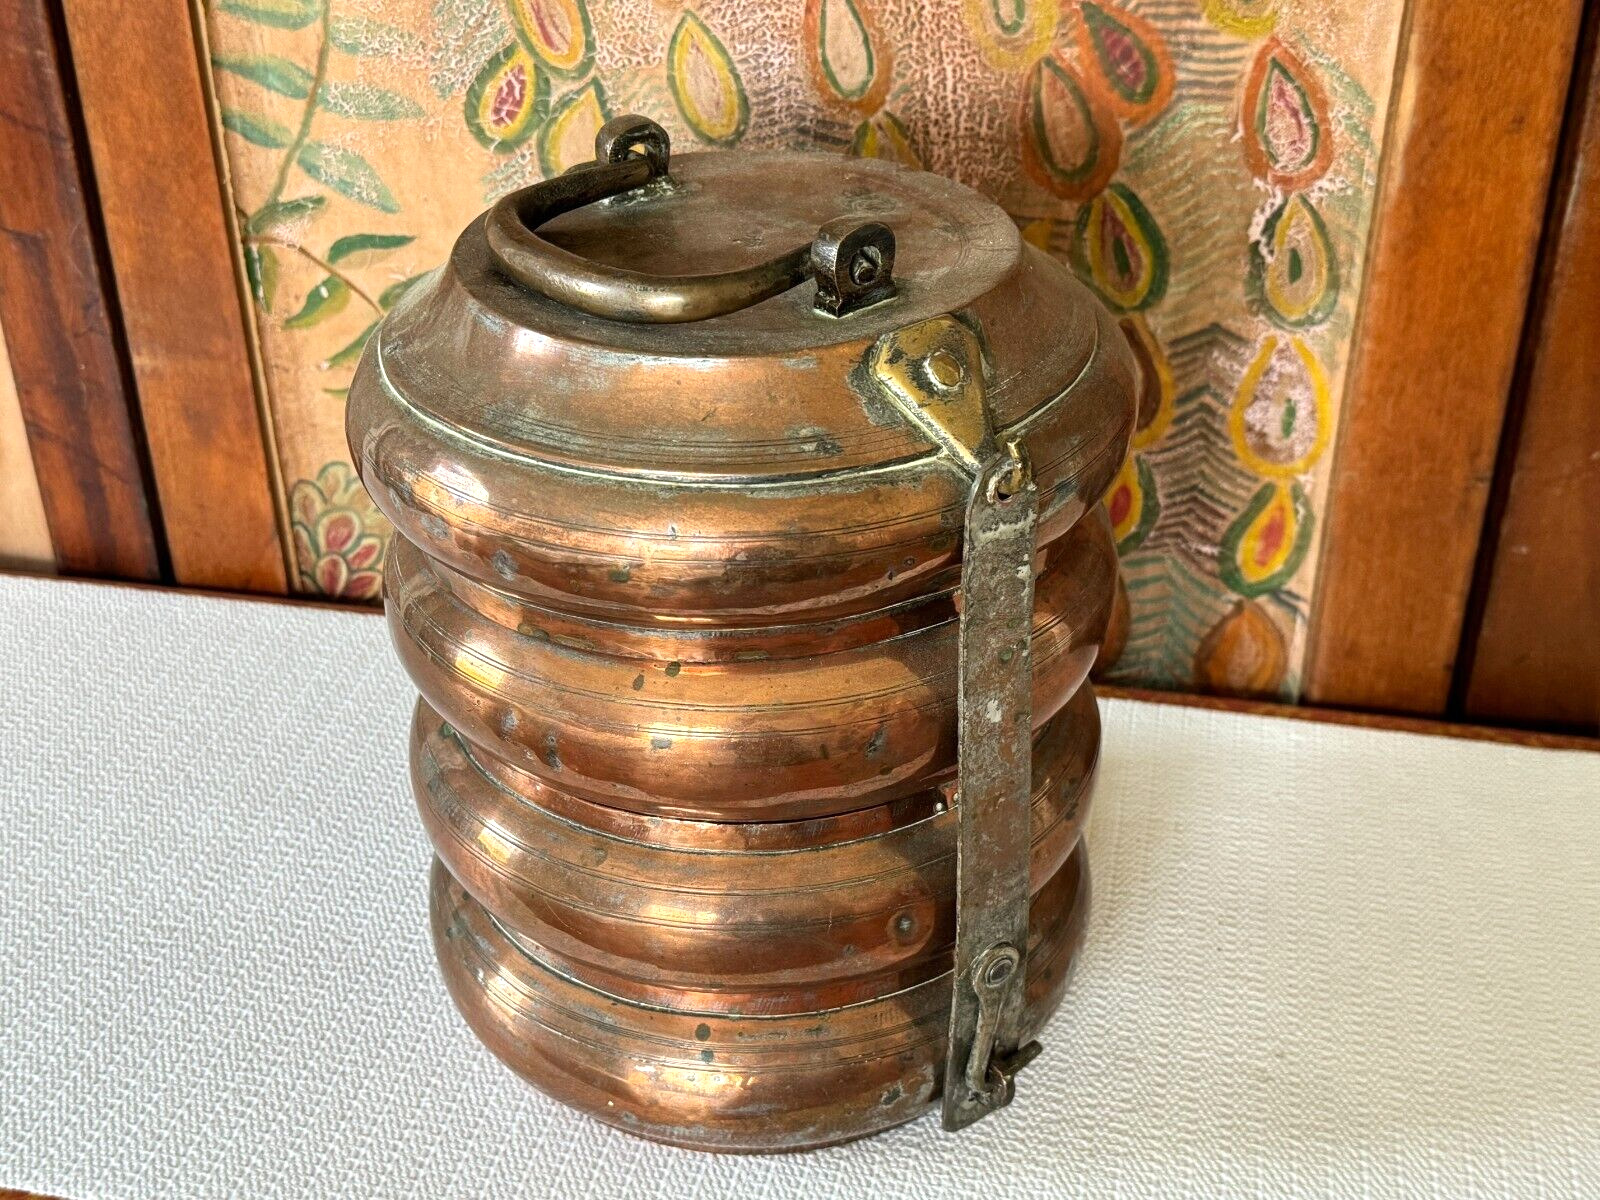 Antique Copper Stacking Turkish Lunch Box Tiffin - 4 Tier